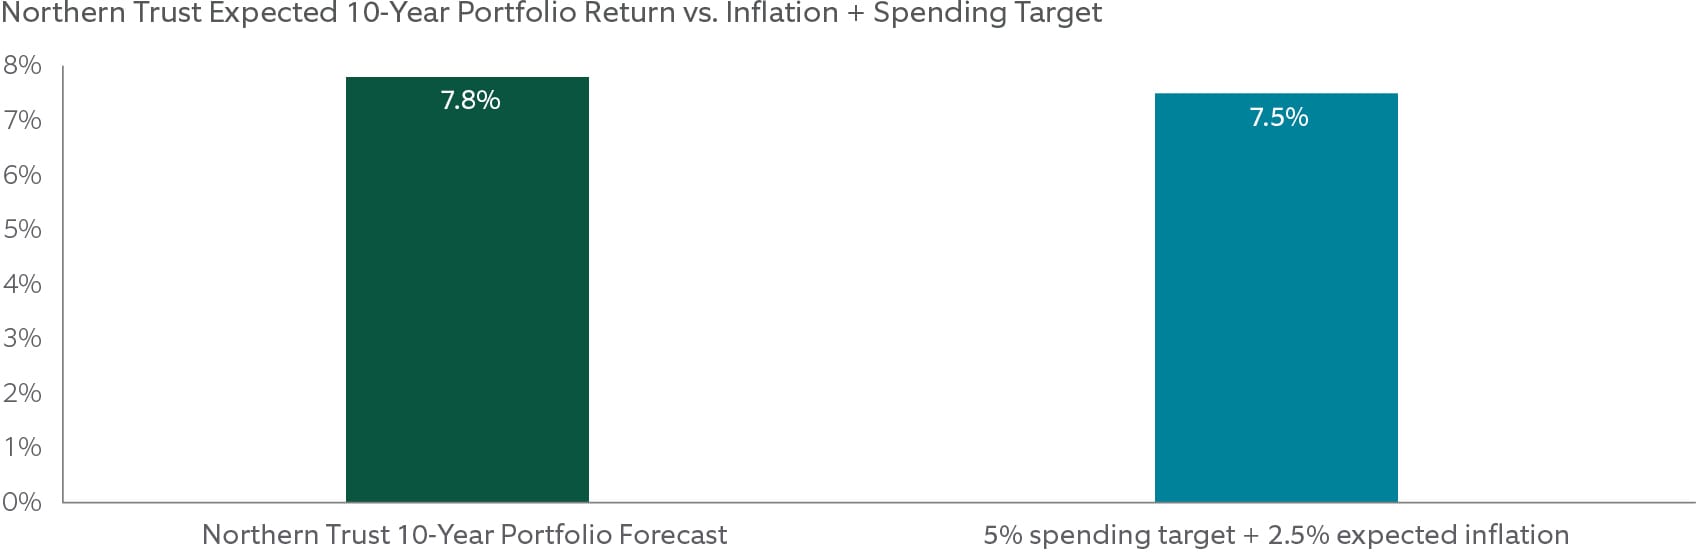 NT Expected 10-Year Portfolio Return vs. Inflation + Spending Target